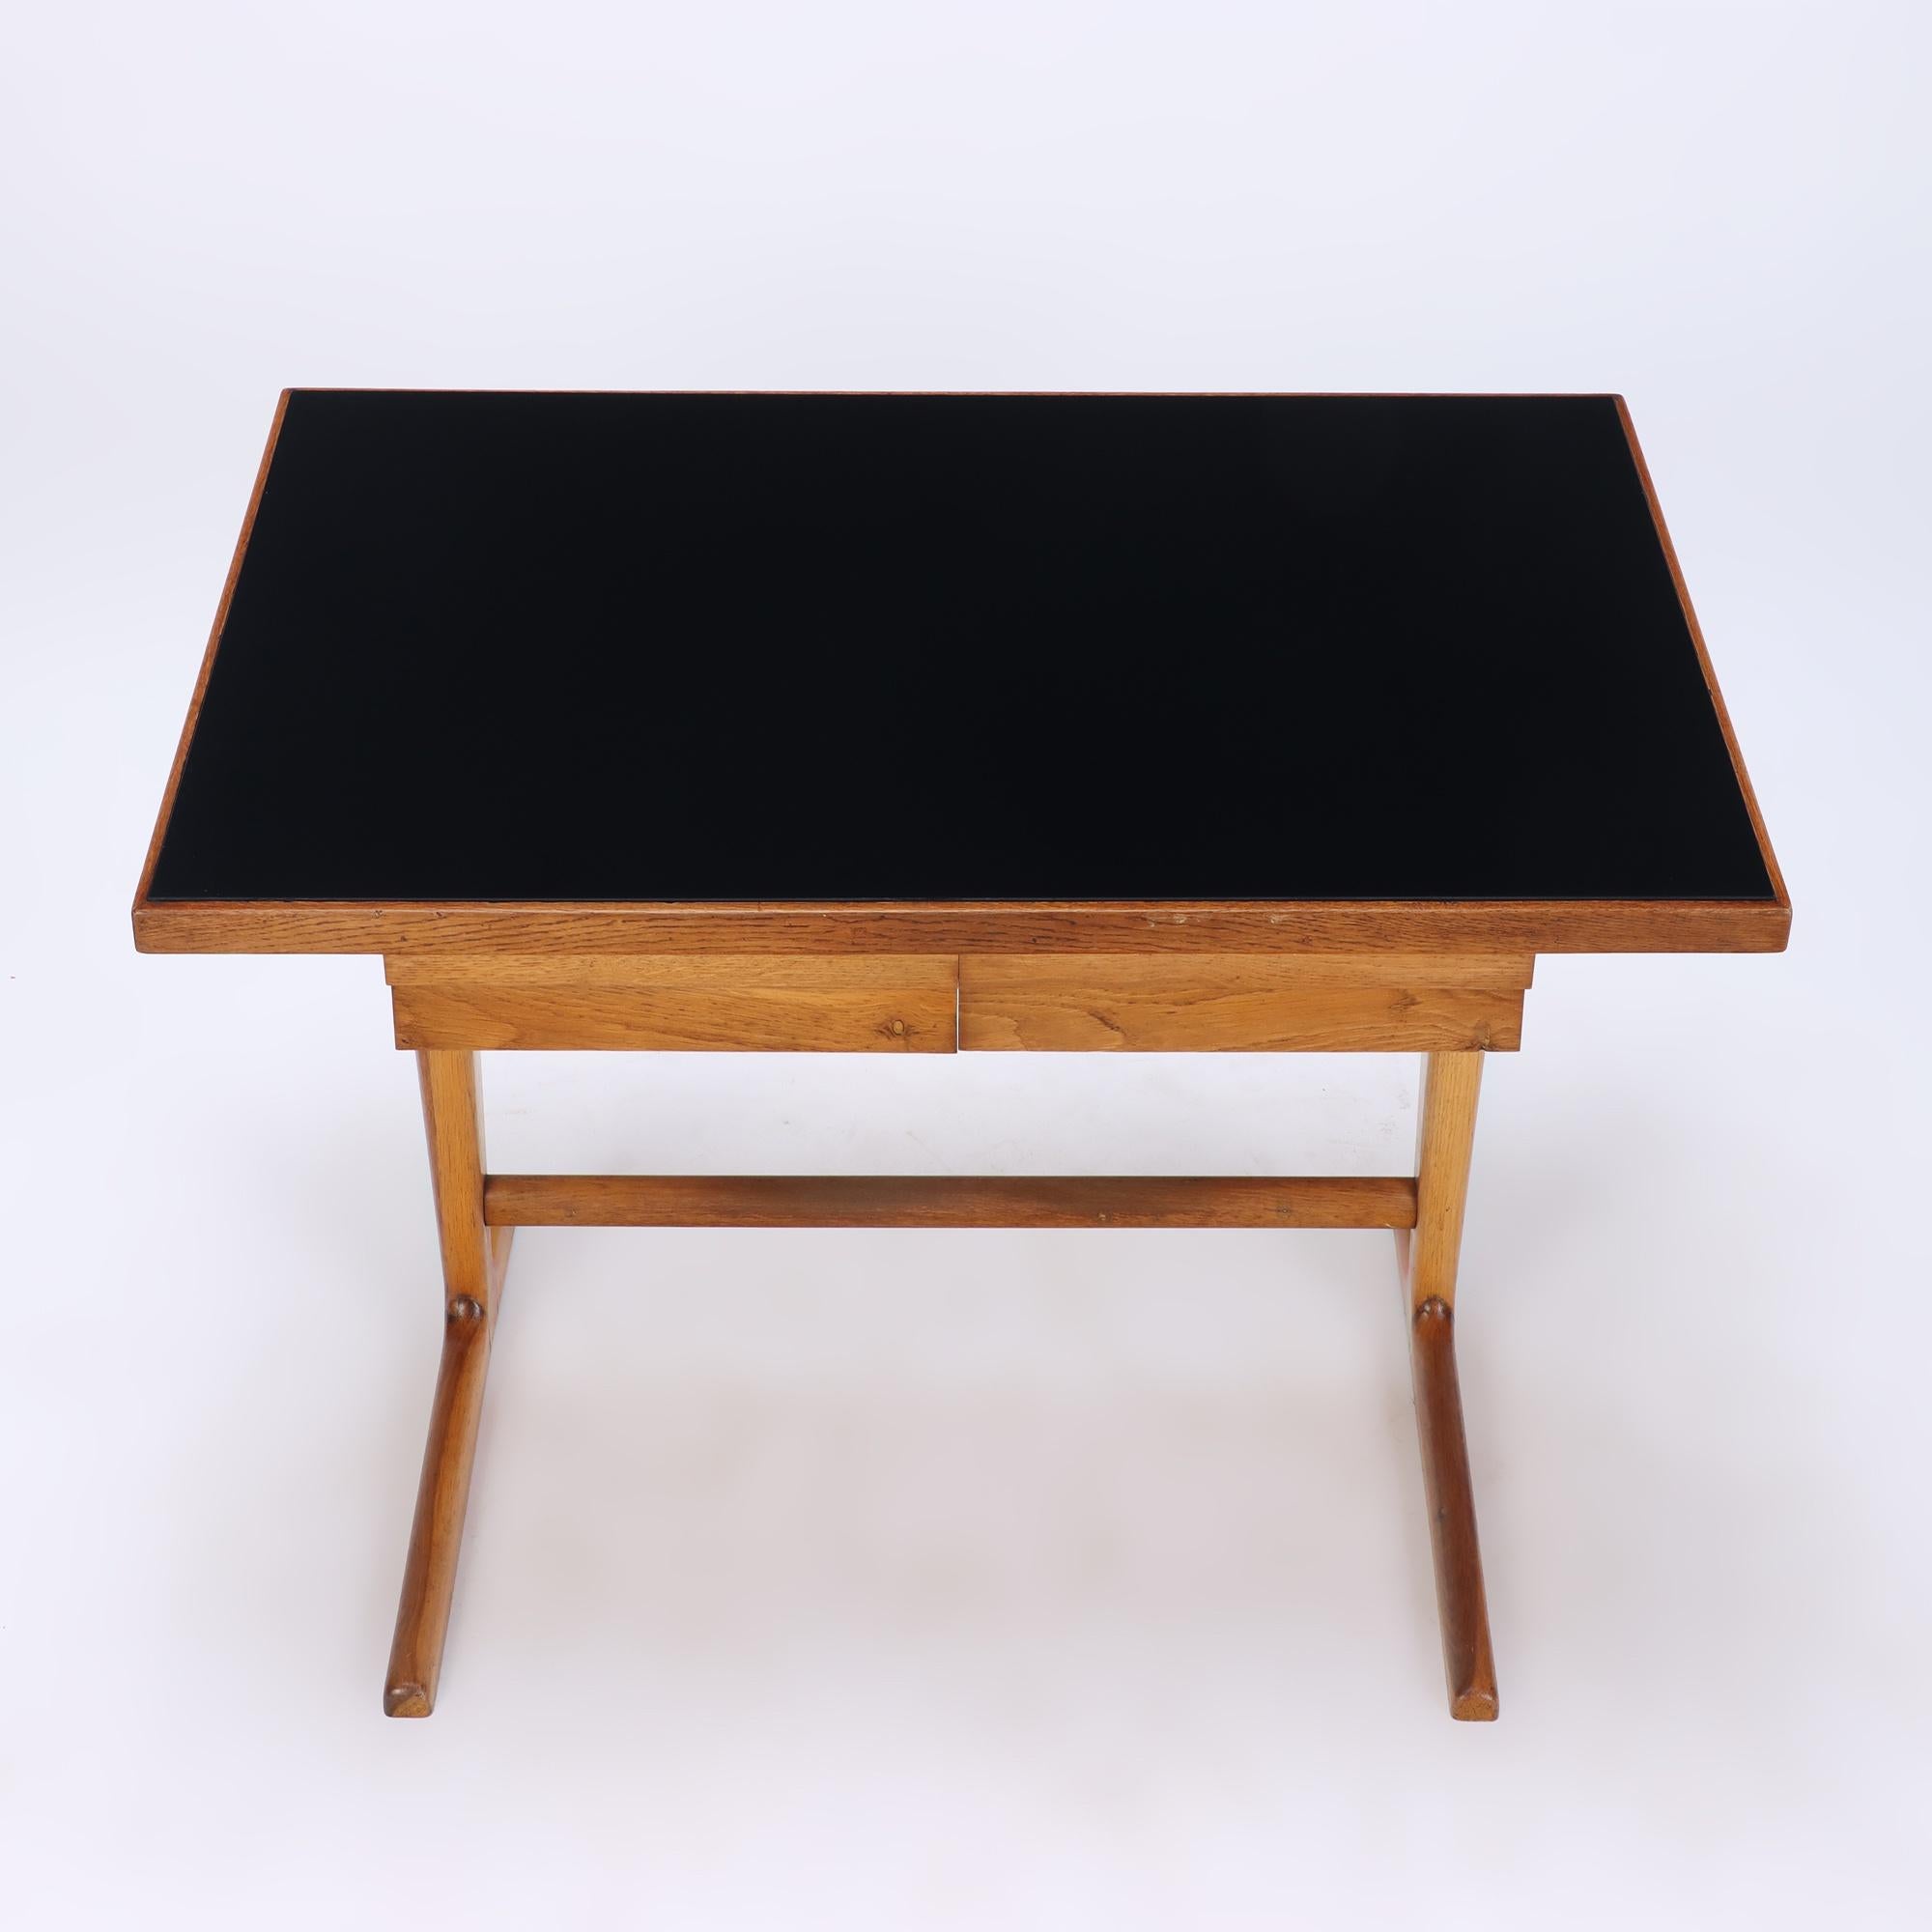 Mid-20th Century Italian Architect's Oak Table / Desk Made with a Slant, circa 1960 For Sale